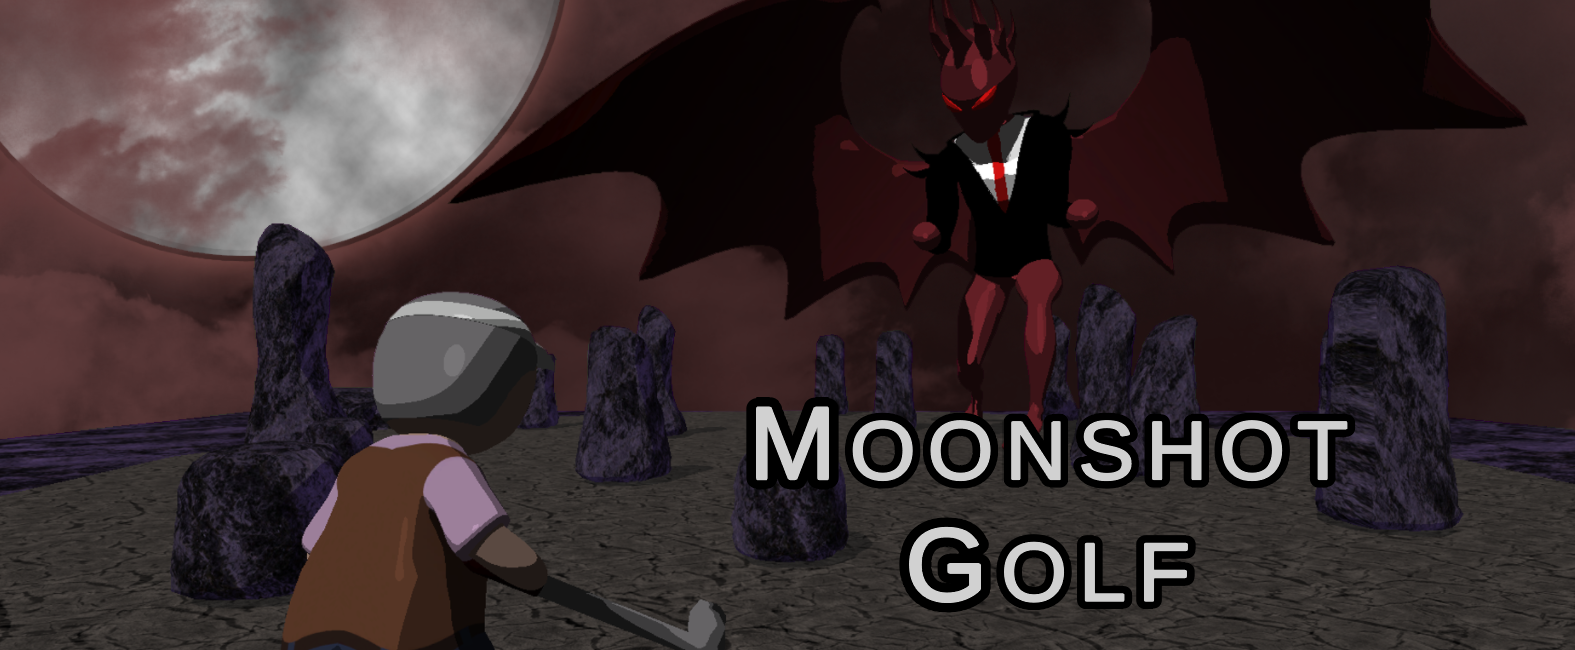 Moonshot Golf